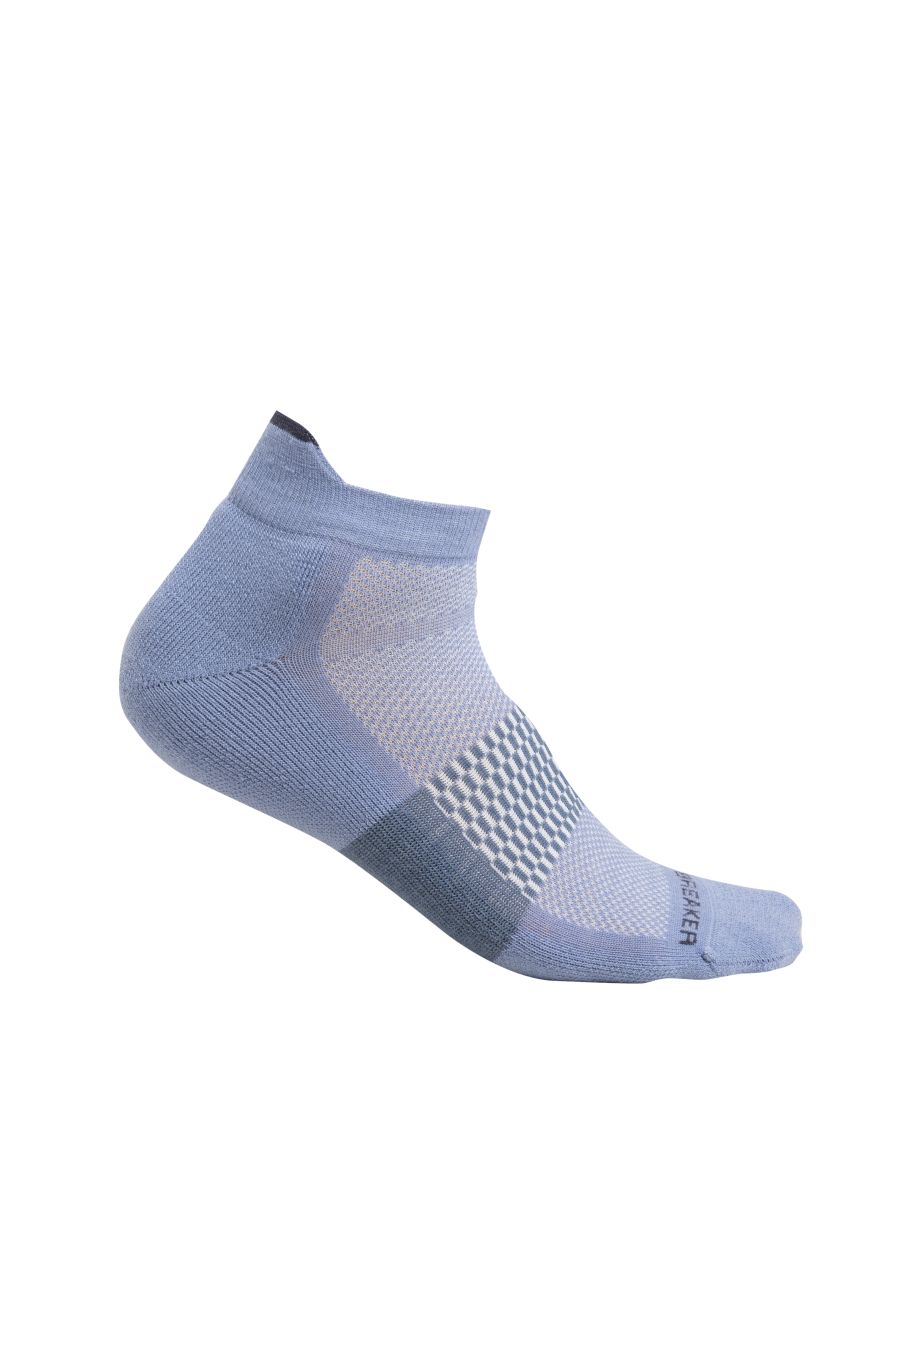 Pánské merino ponožky ICEBREAKER Mens Multisport Light Micro, Kyanite/Graphite/Dawn velikost: 39-41,5 (S)